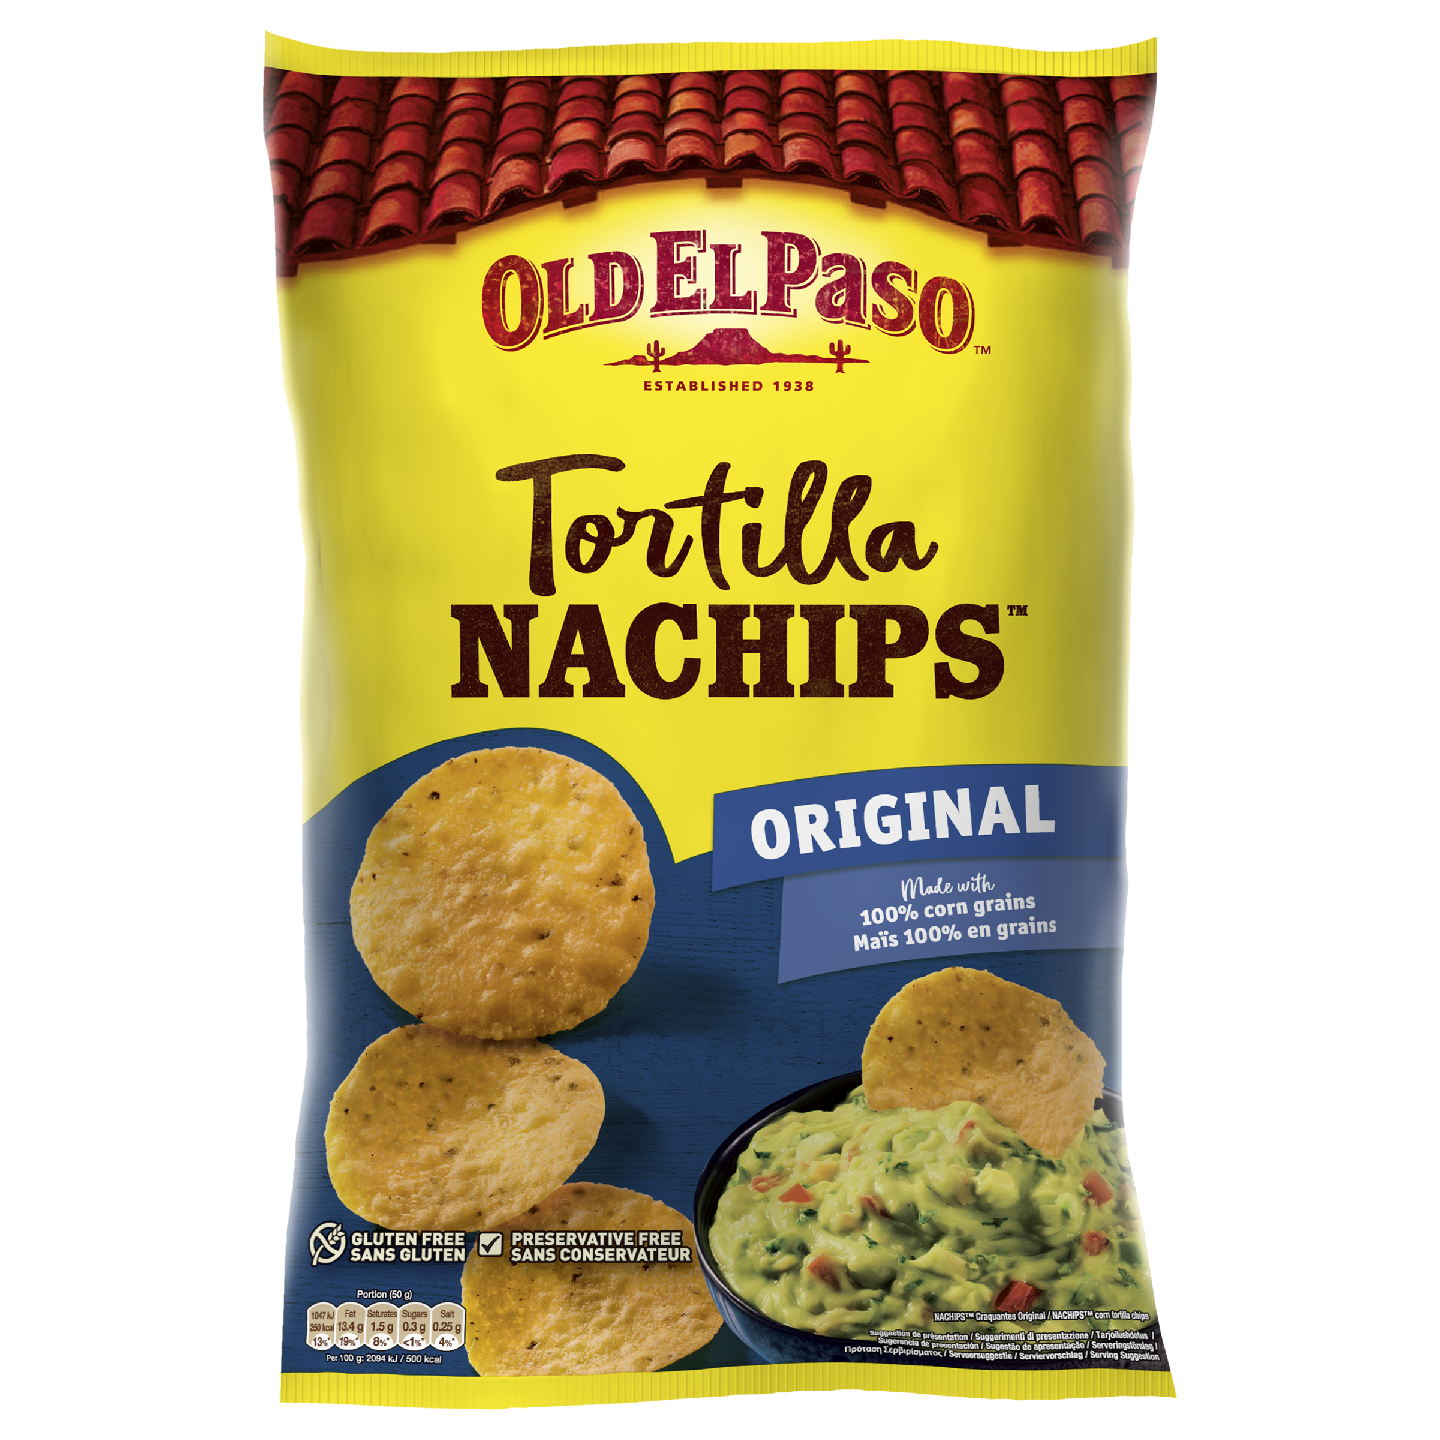 Old El Paso Orginal crunchy nachips 450g